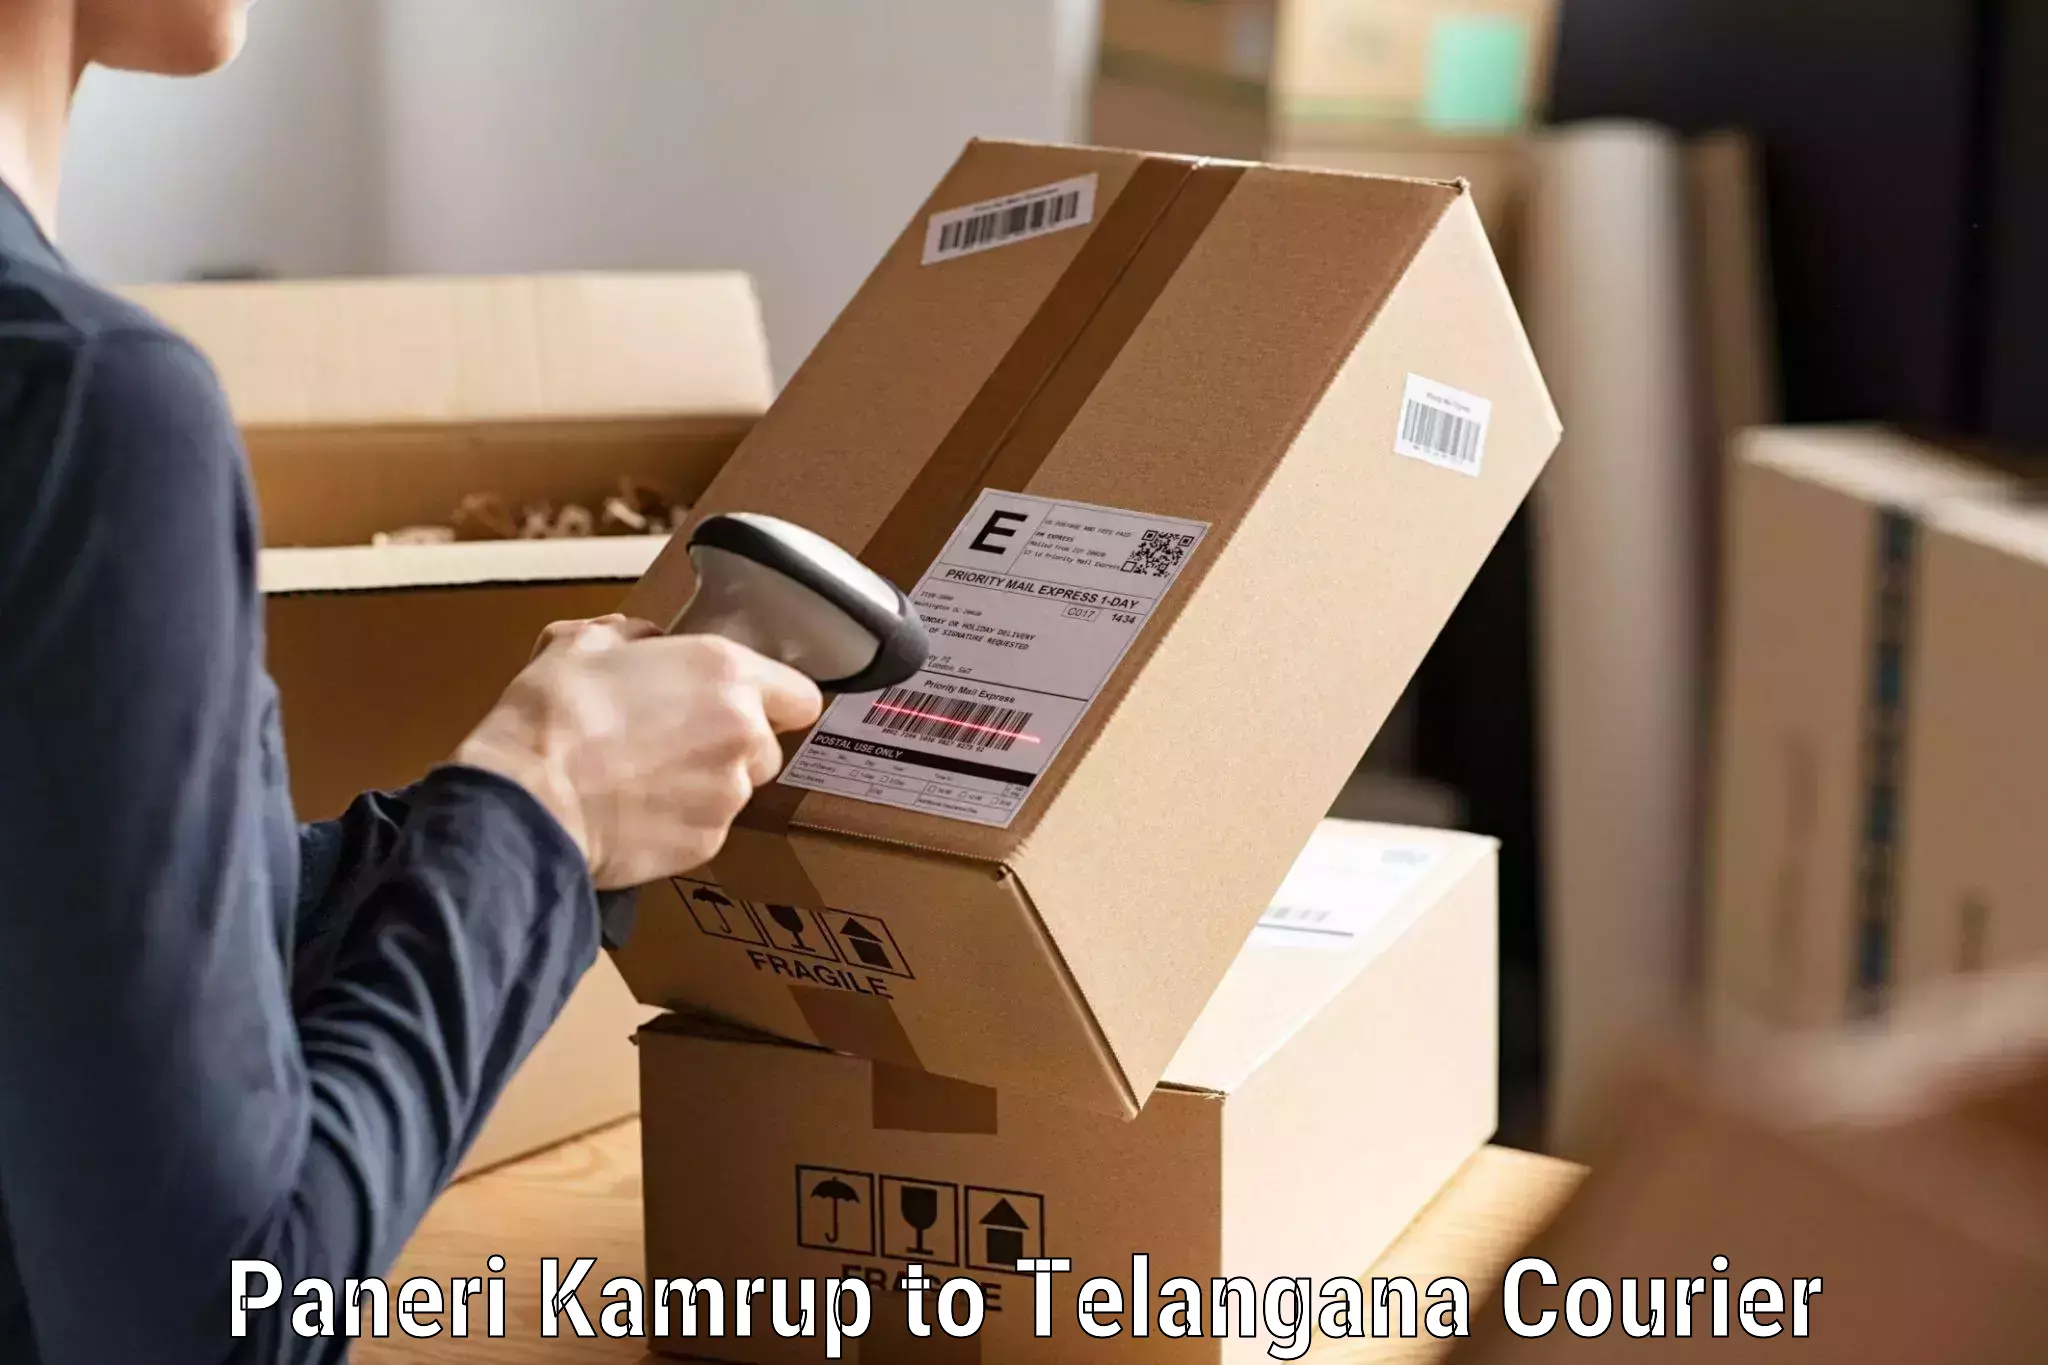 Advanced shipping technology Paneri Kamrup to Tallada